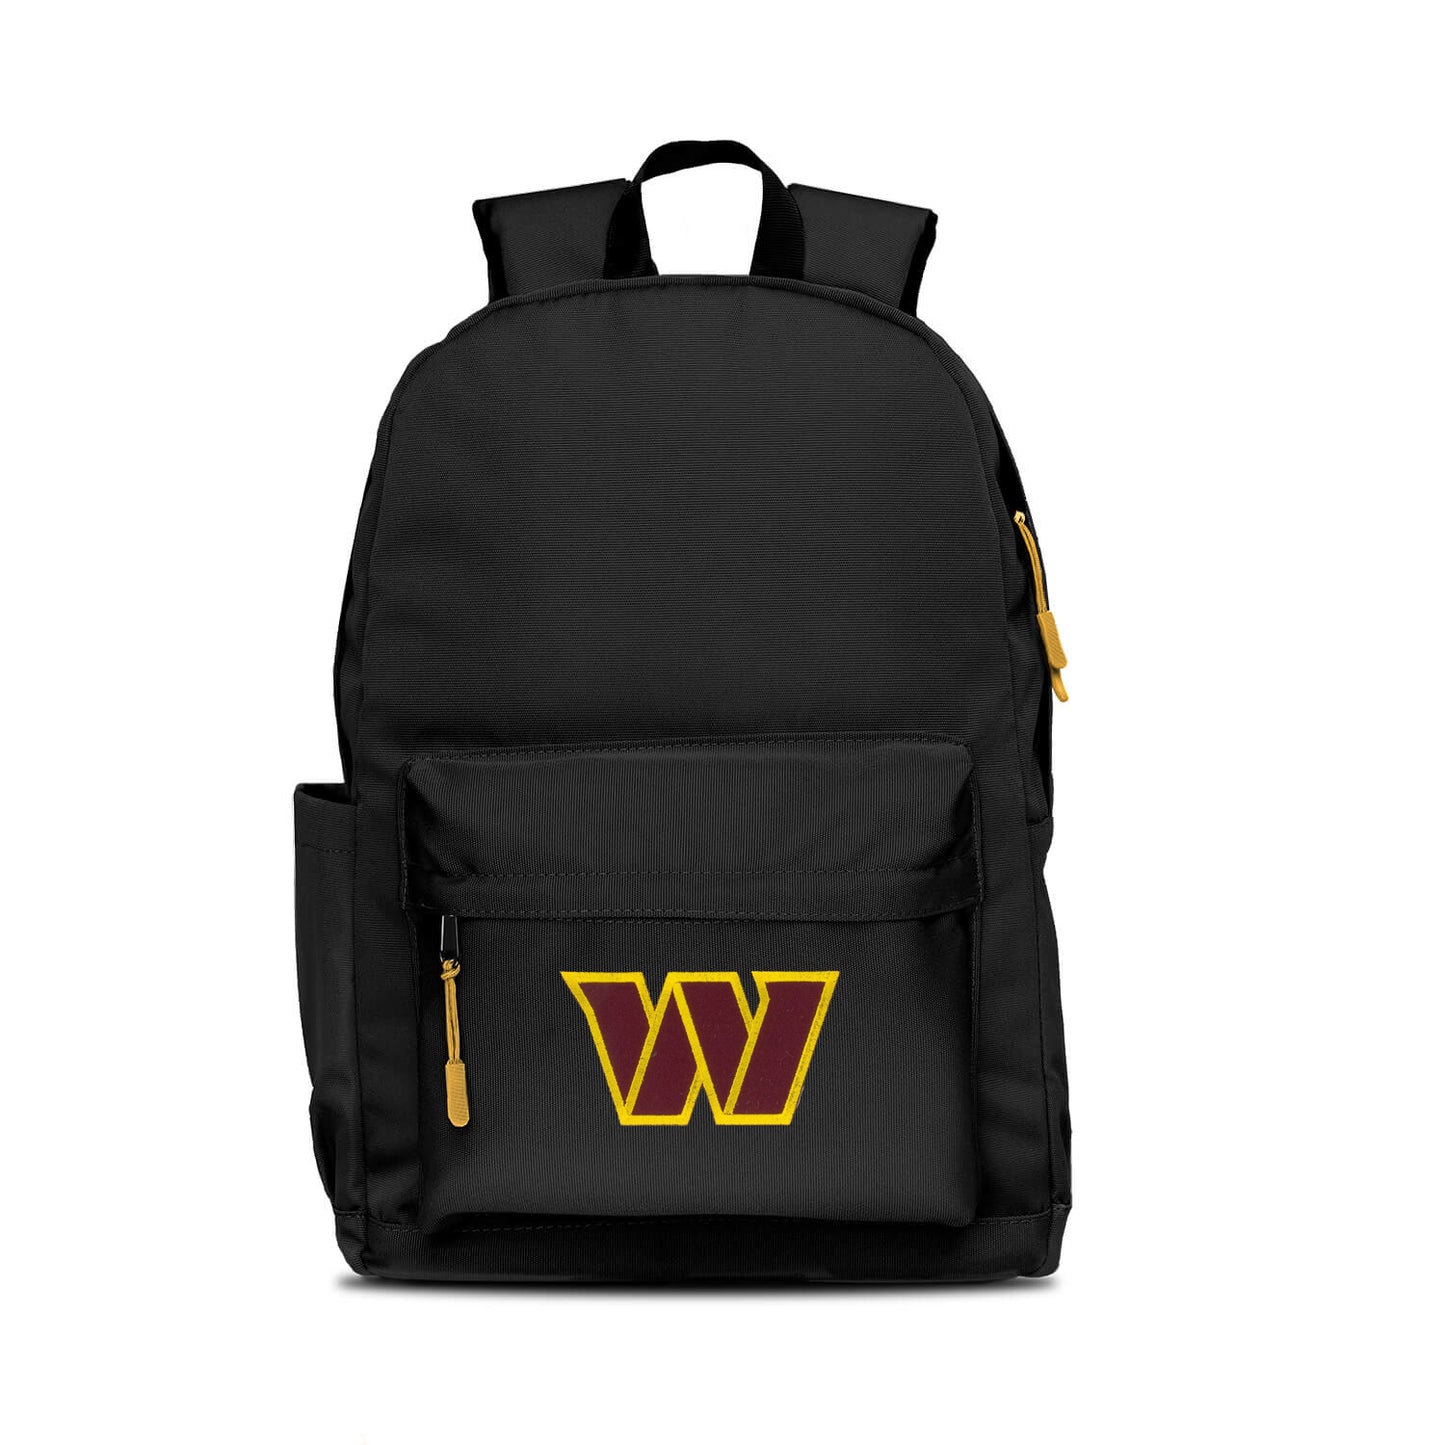 Washington Commanders Campus Laptop Backpack -Black